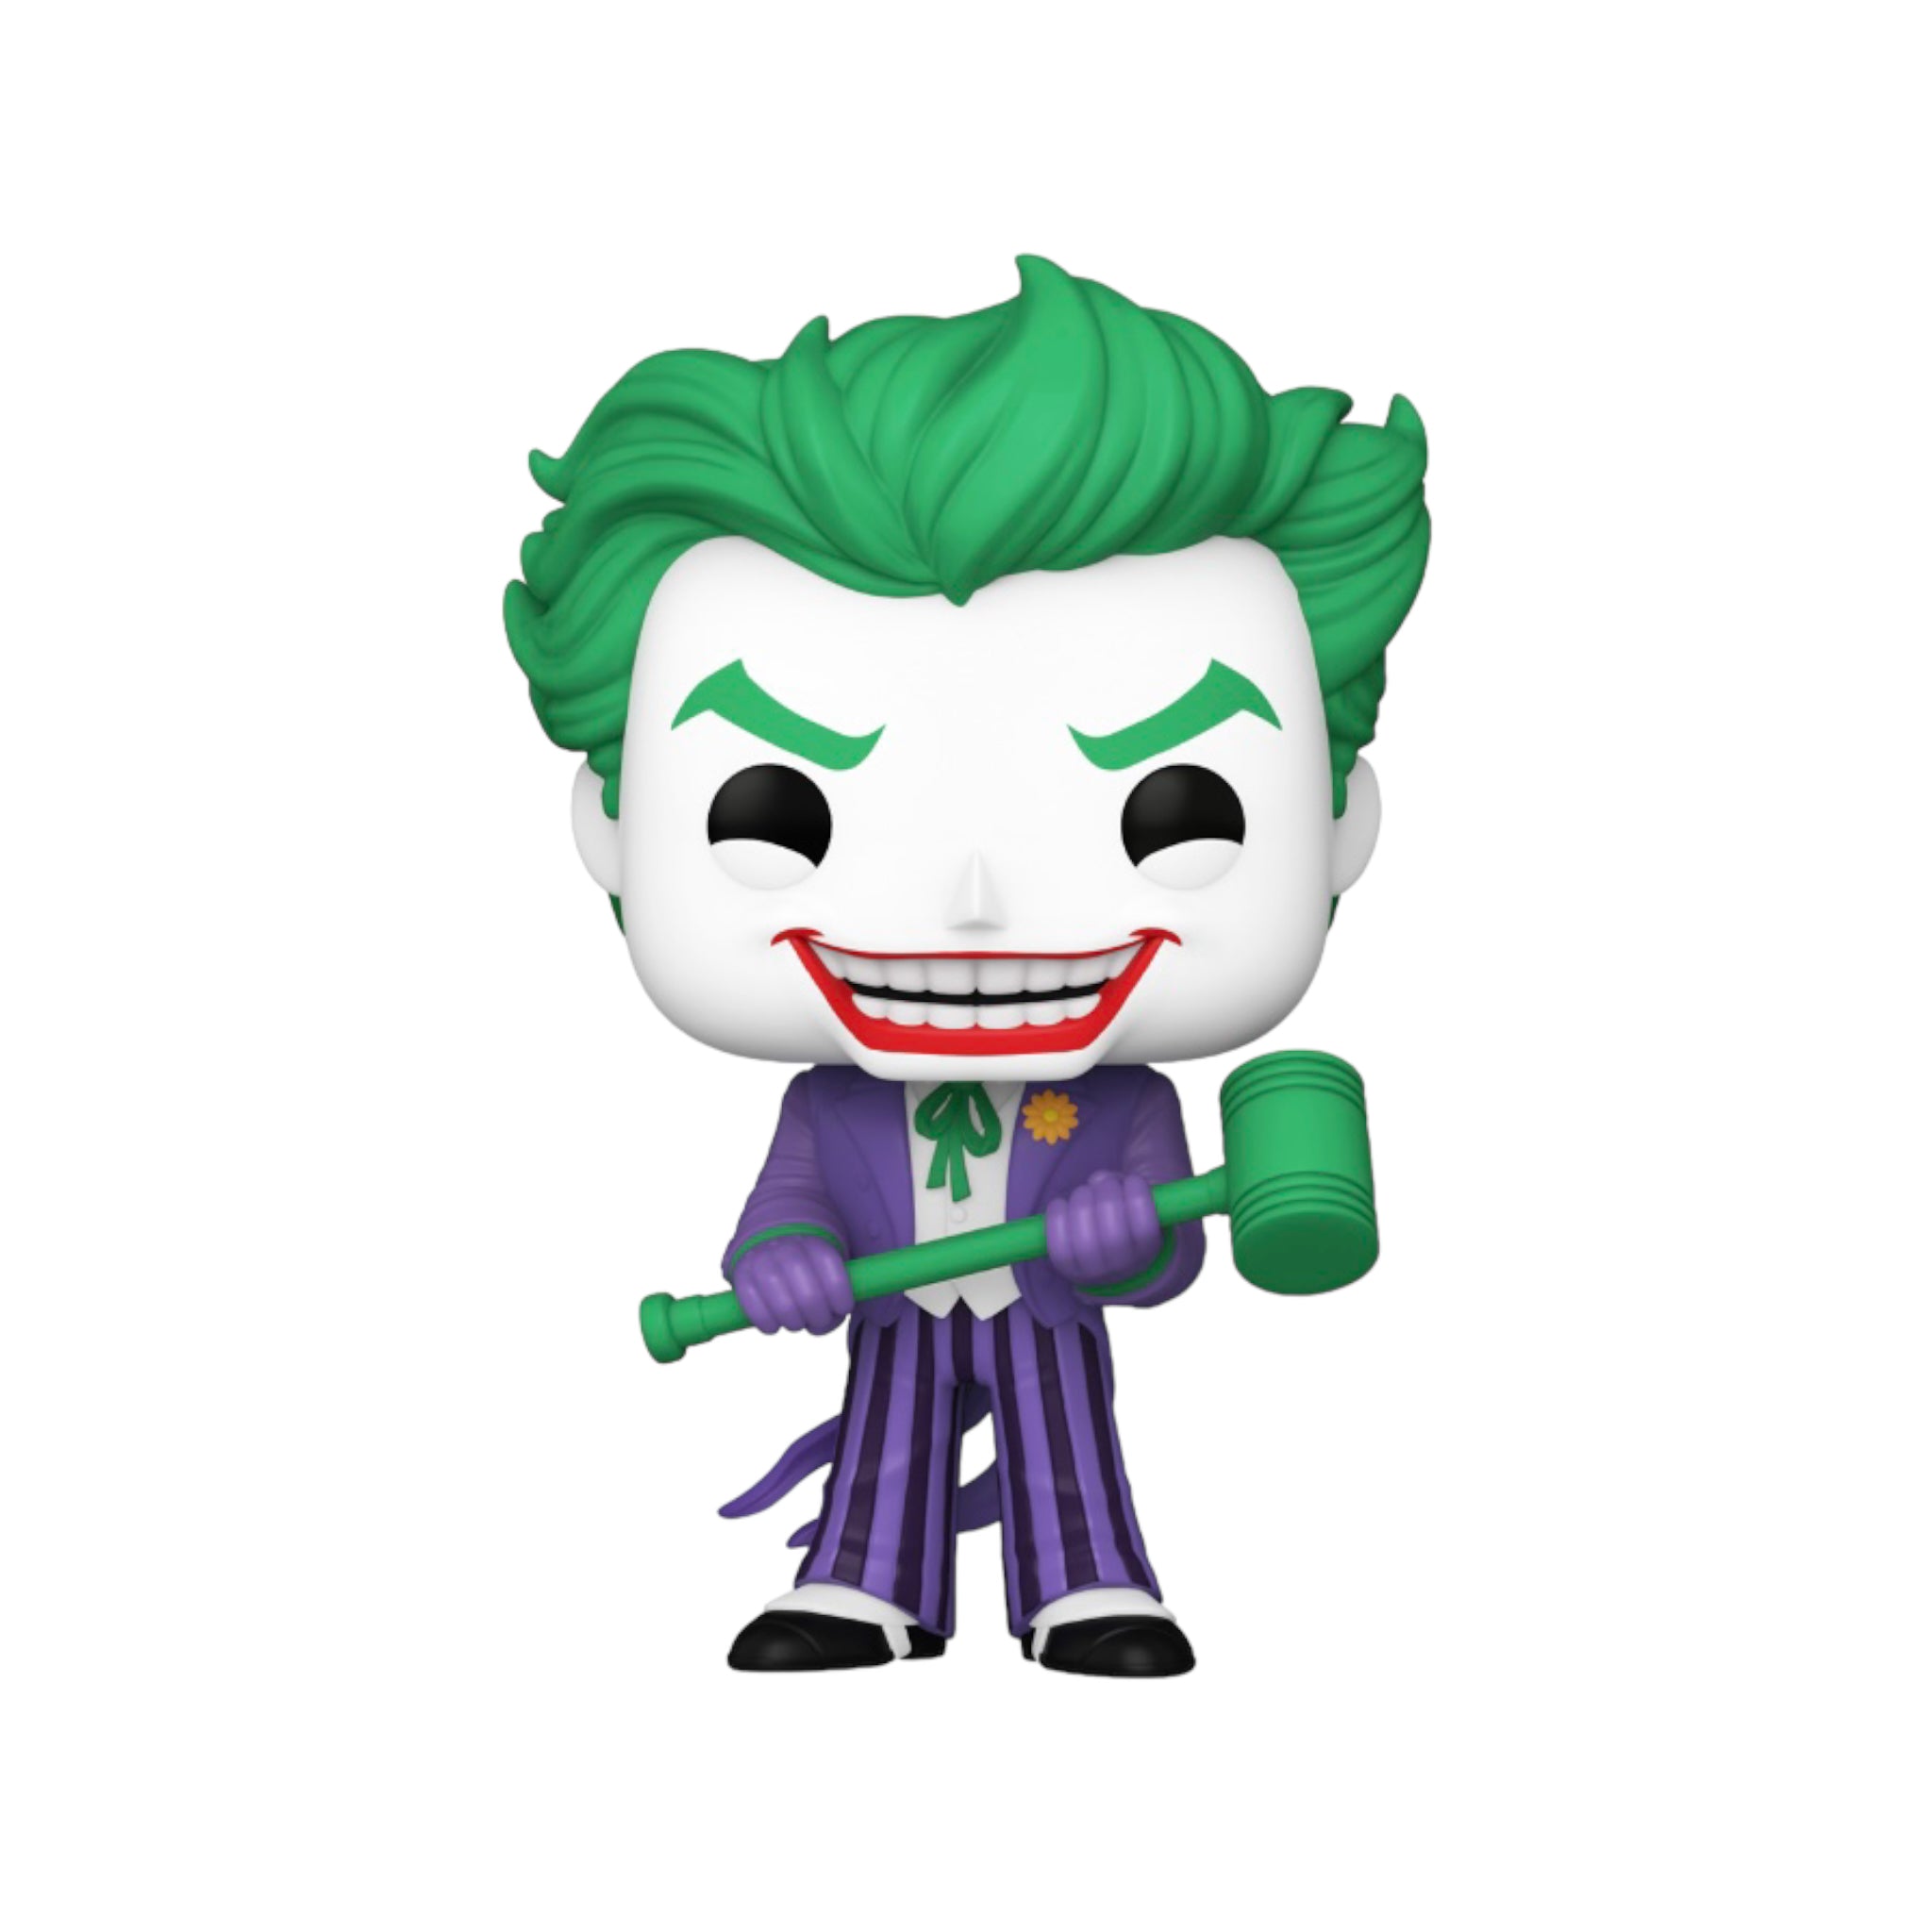 Joker #492 Funko Pop! - Batman Gotham Freakshow - GameStop Exclusive